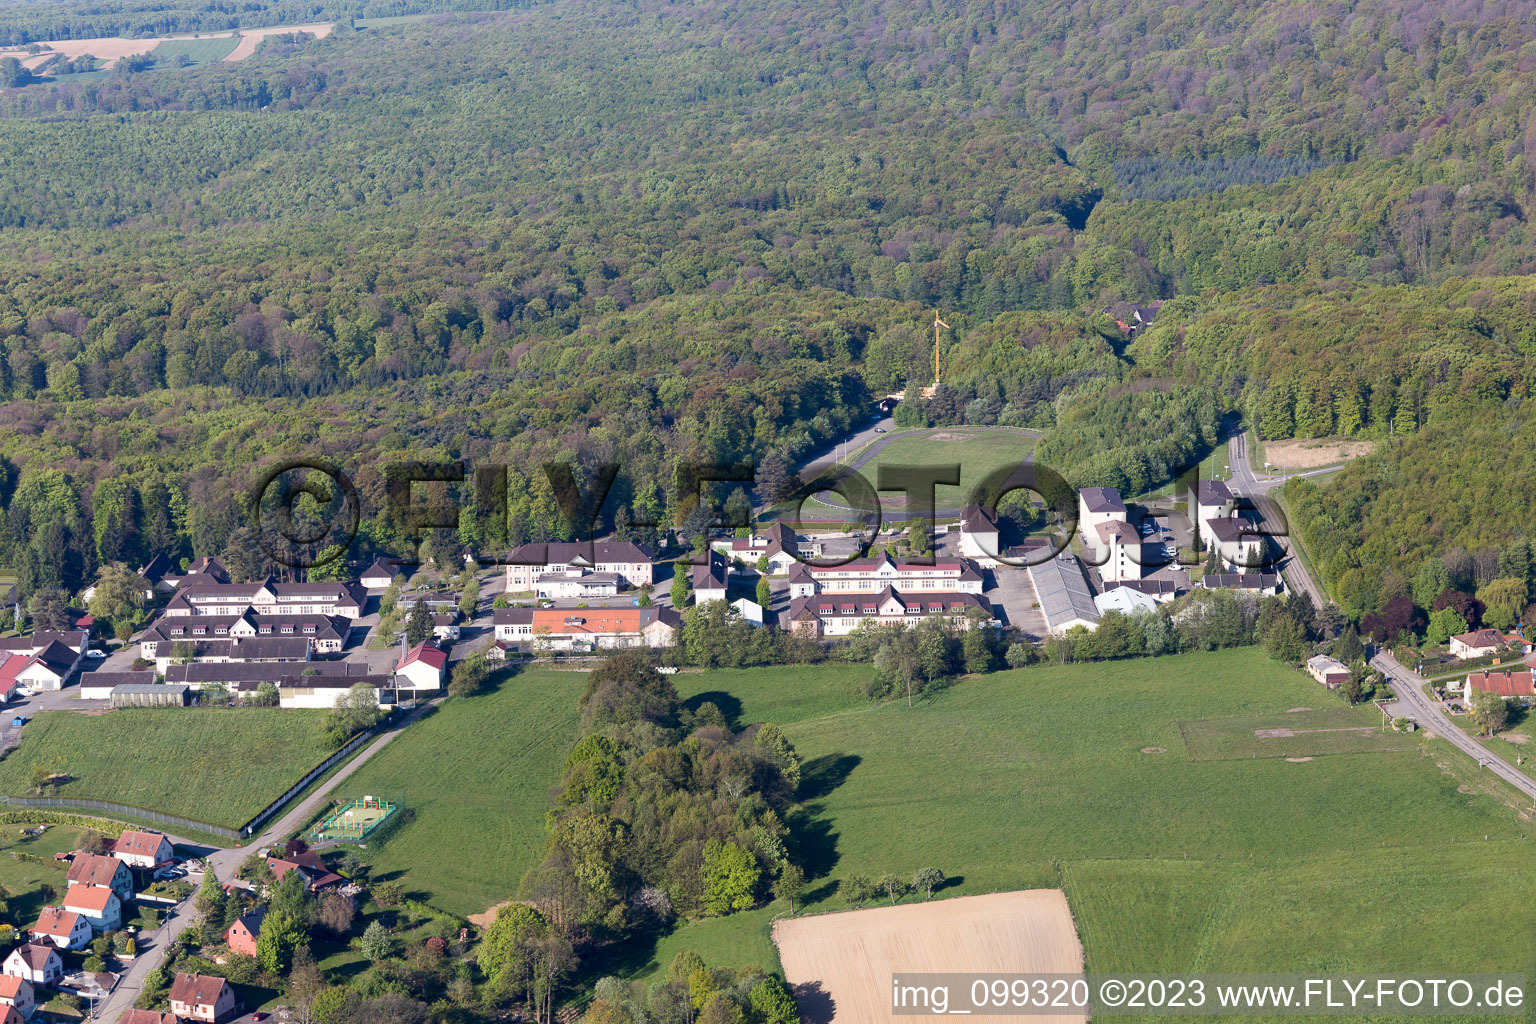 Drachenbronn-Birlenbach dans le département Bas Rhin, France hors des airs